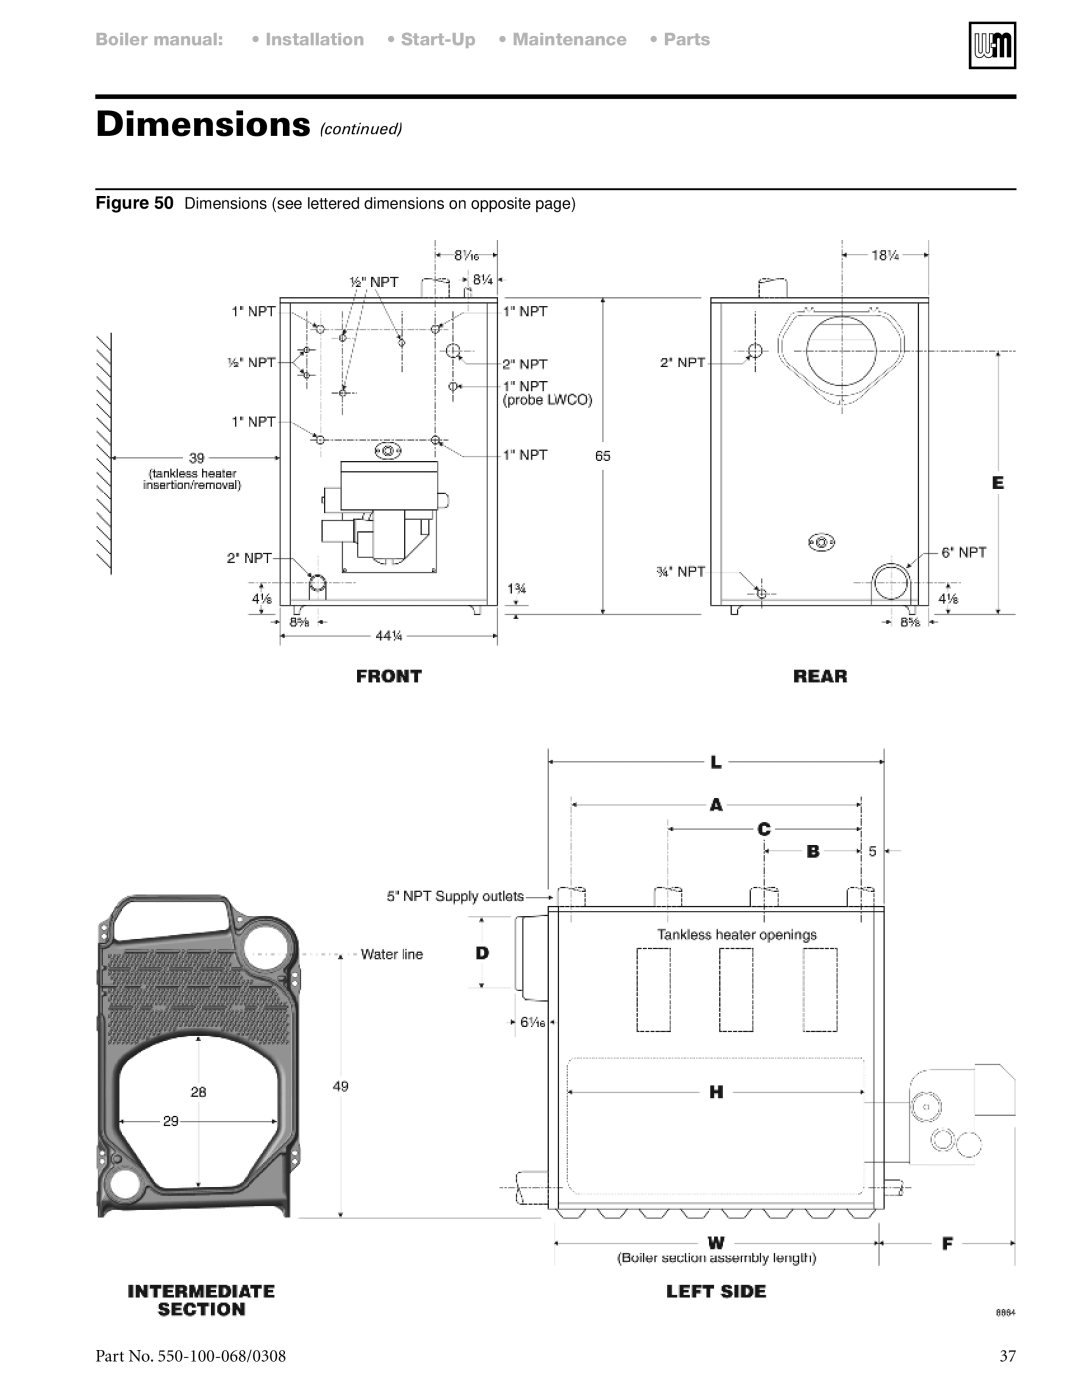 Weil-McLain 88 manual Dimensions continued, Part No. 550-100-068/0308 